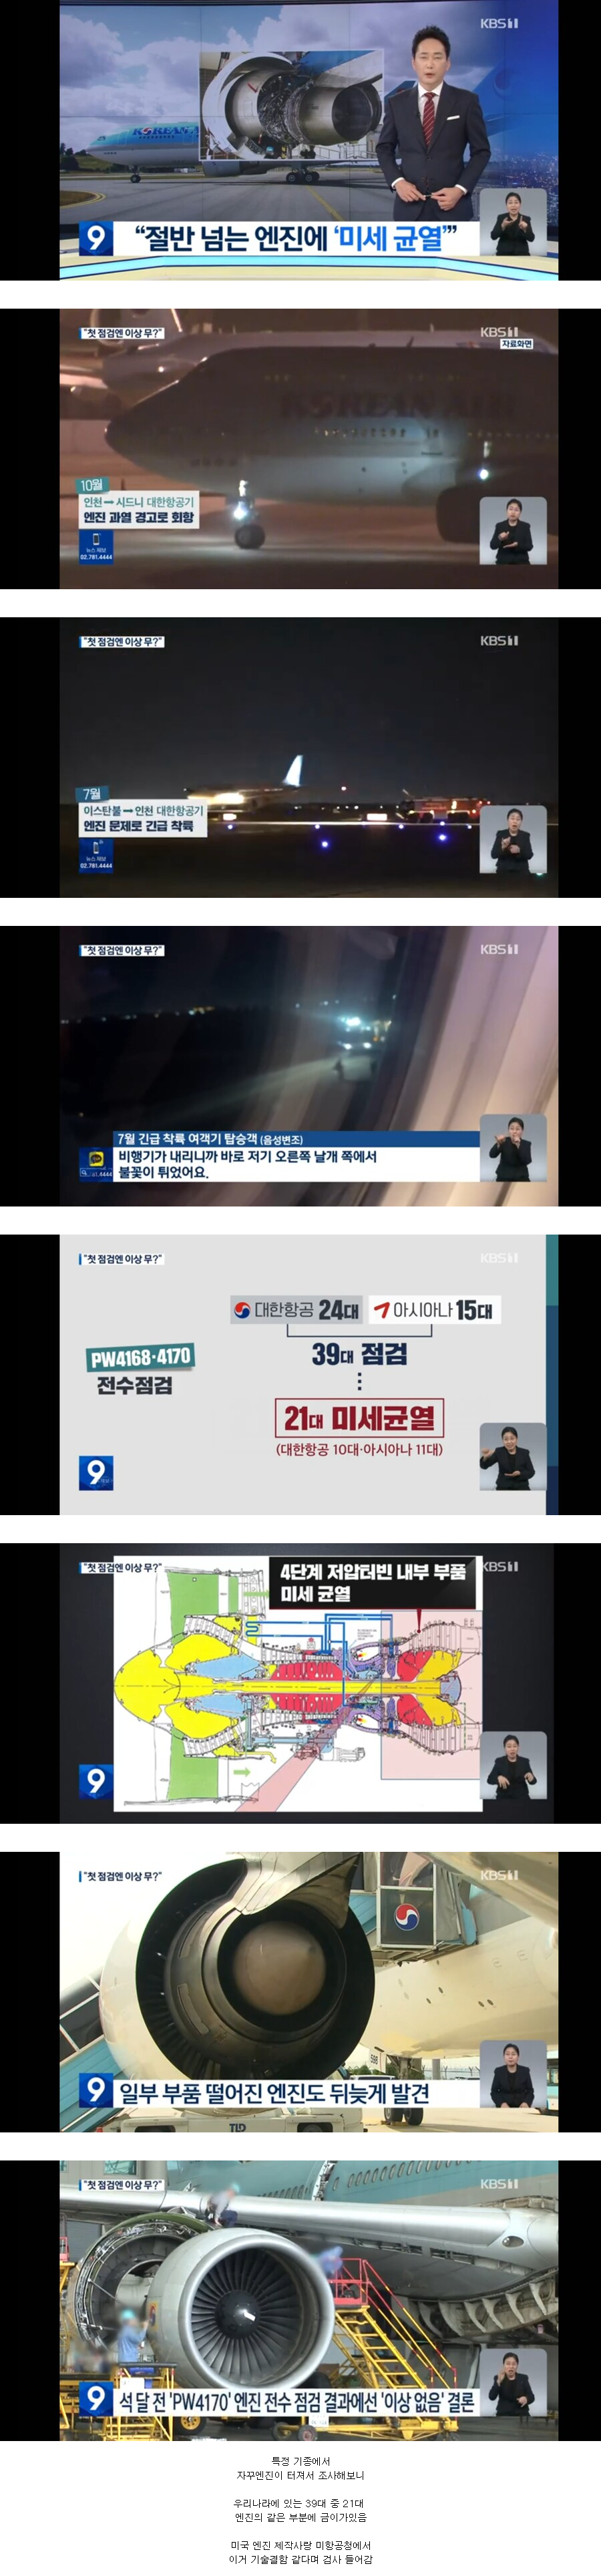 Screenshot 2022-11-18 at 13-51-44 최근 한국 여객기 사고가 자꾸 났던 이유. jpg 유머 게시판 루리웹.png